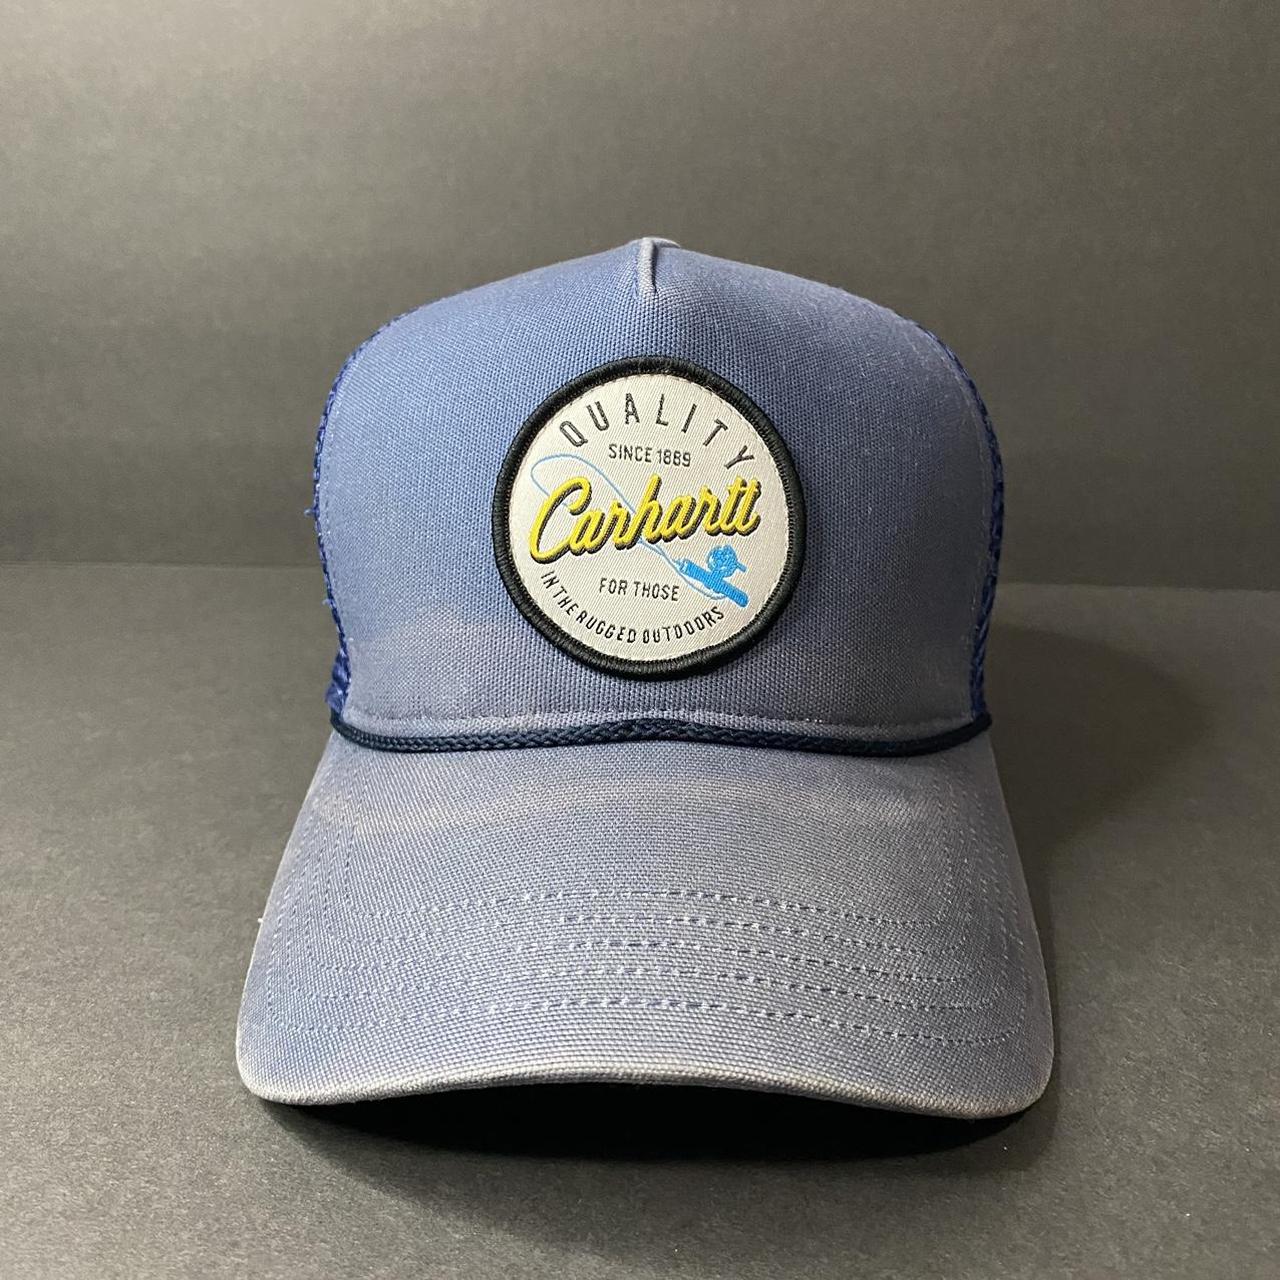 Carhartt Quality Since 1889 Blue Fishing Theme Cap - Depop